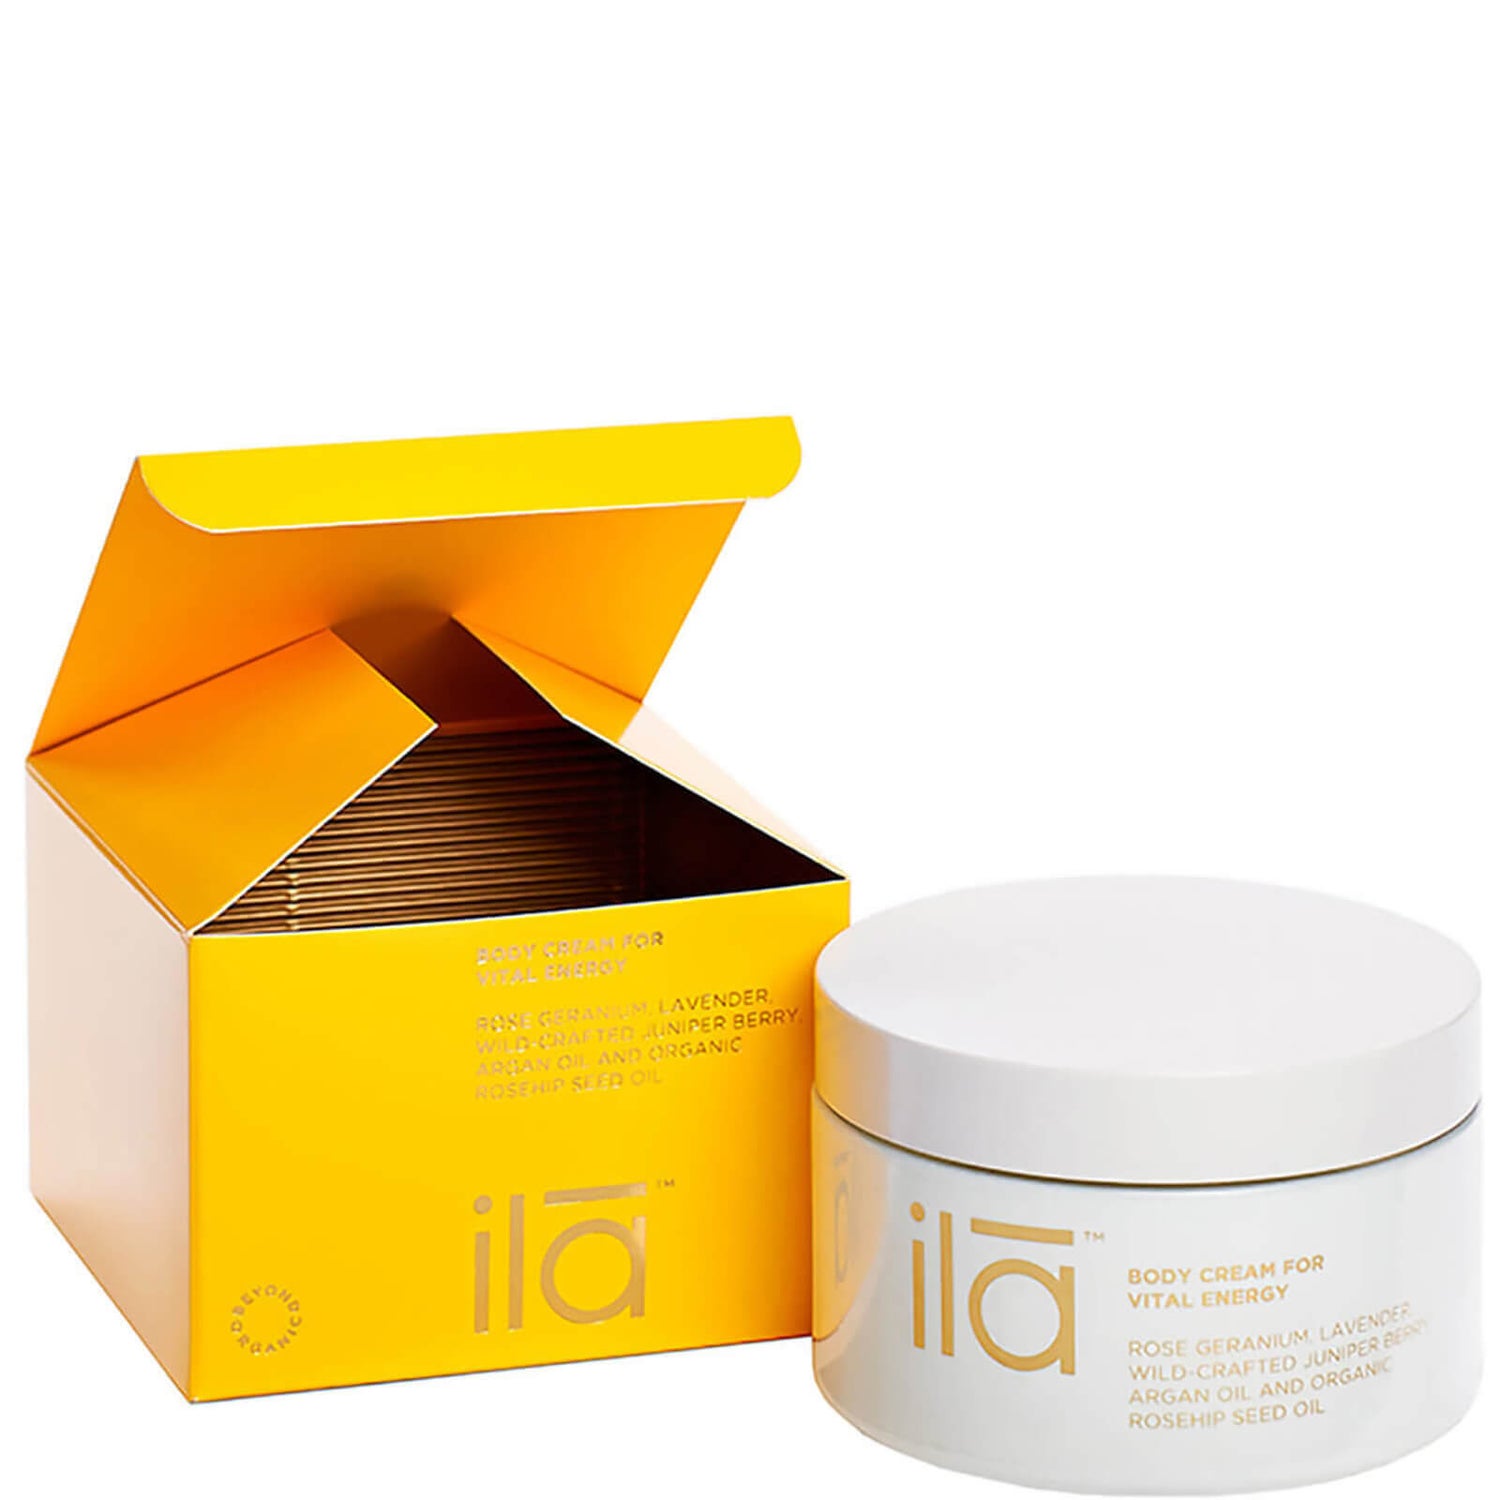 ila-spa Body Cream for Vital Energy 7oz